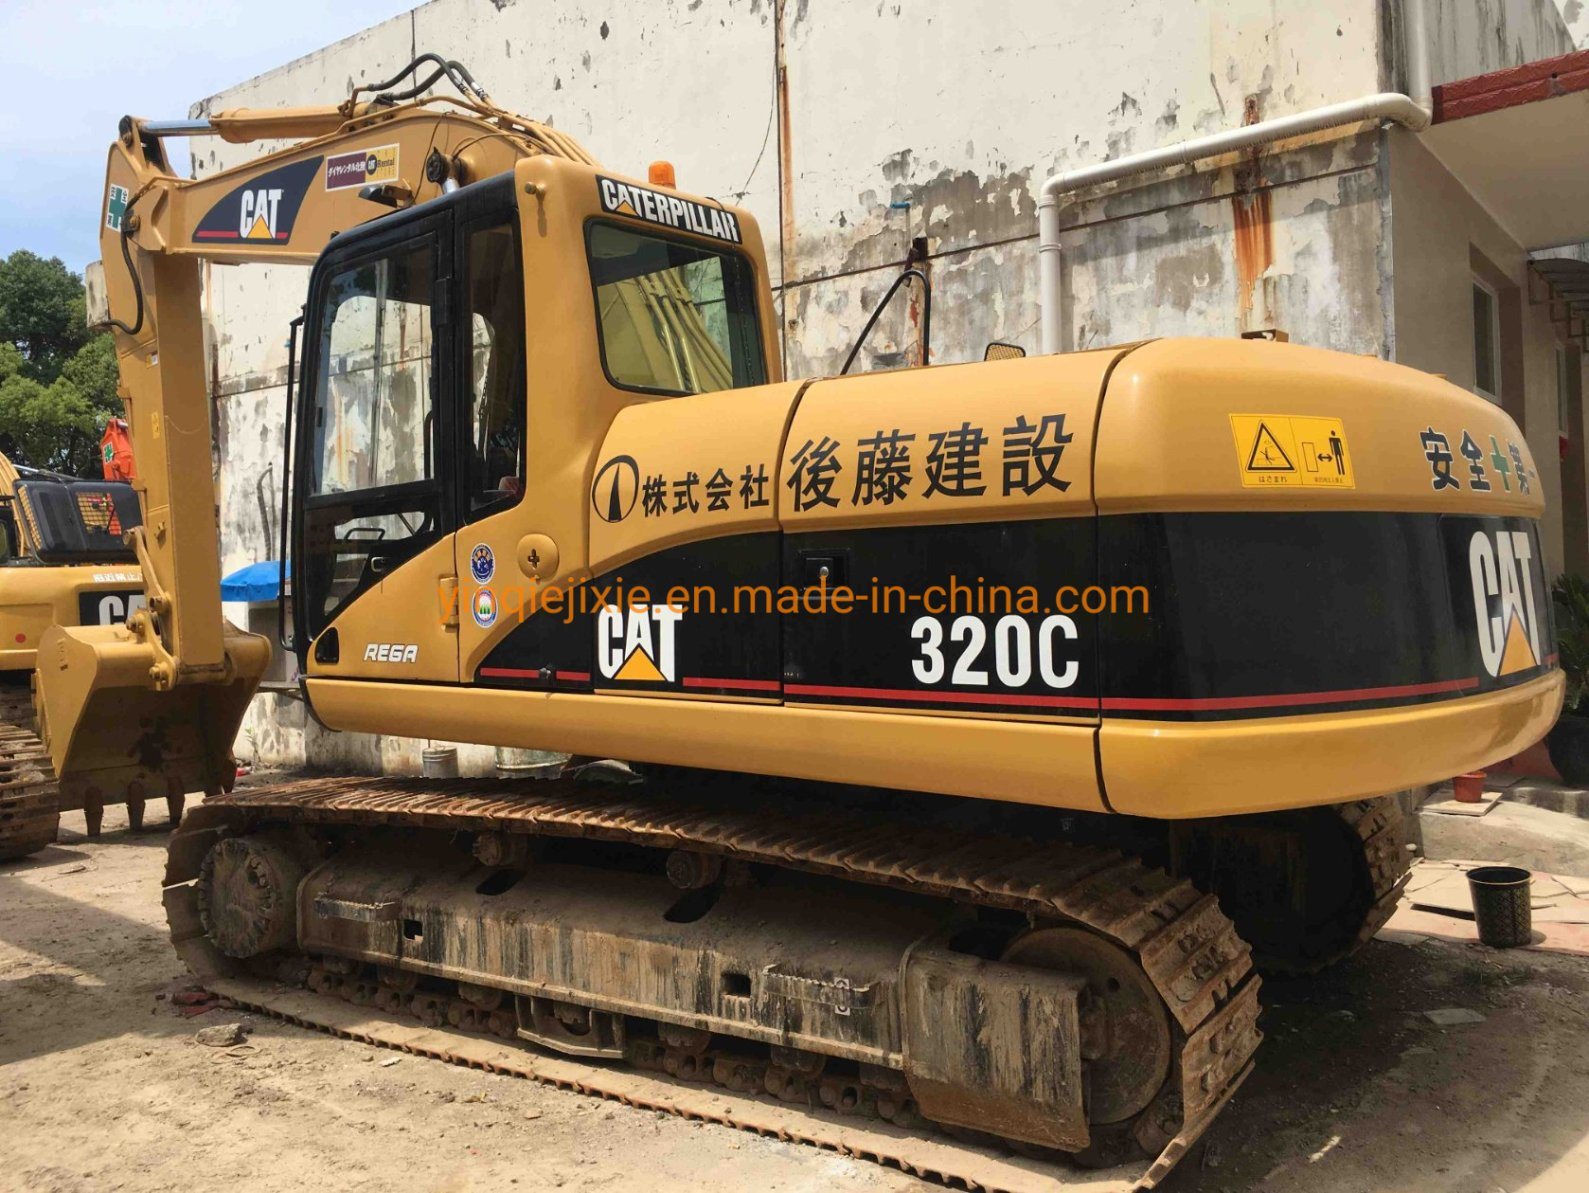 Second Hand Hydraulic Excavator Caterpillar 330c, Used Hydraulic Excavator, Automatic Excavator for Sale